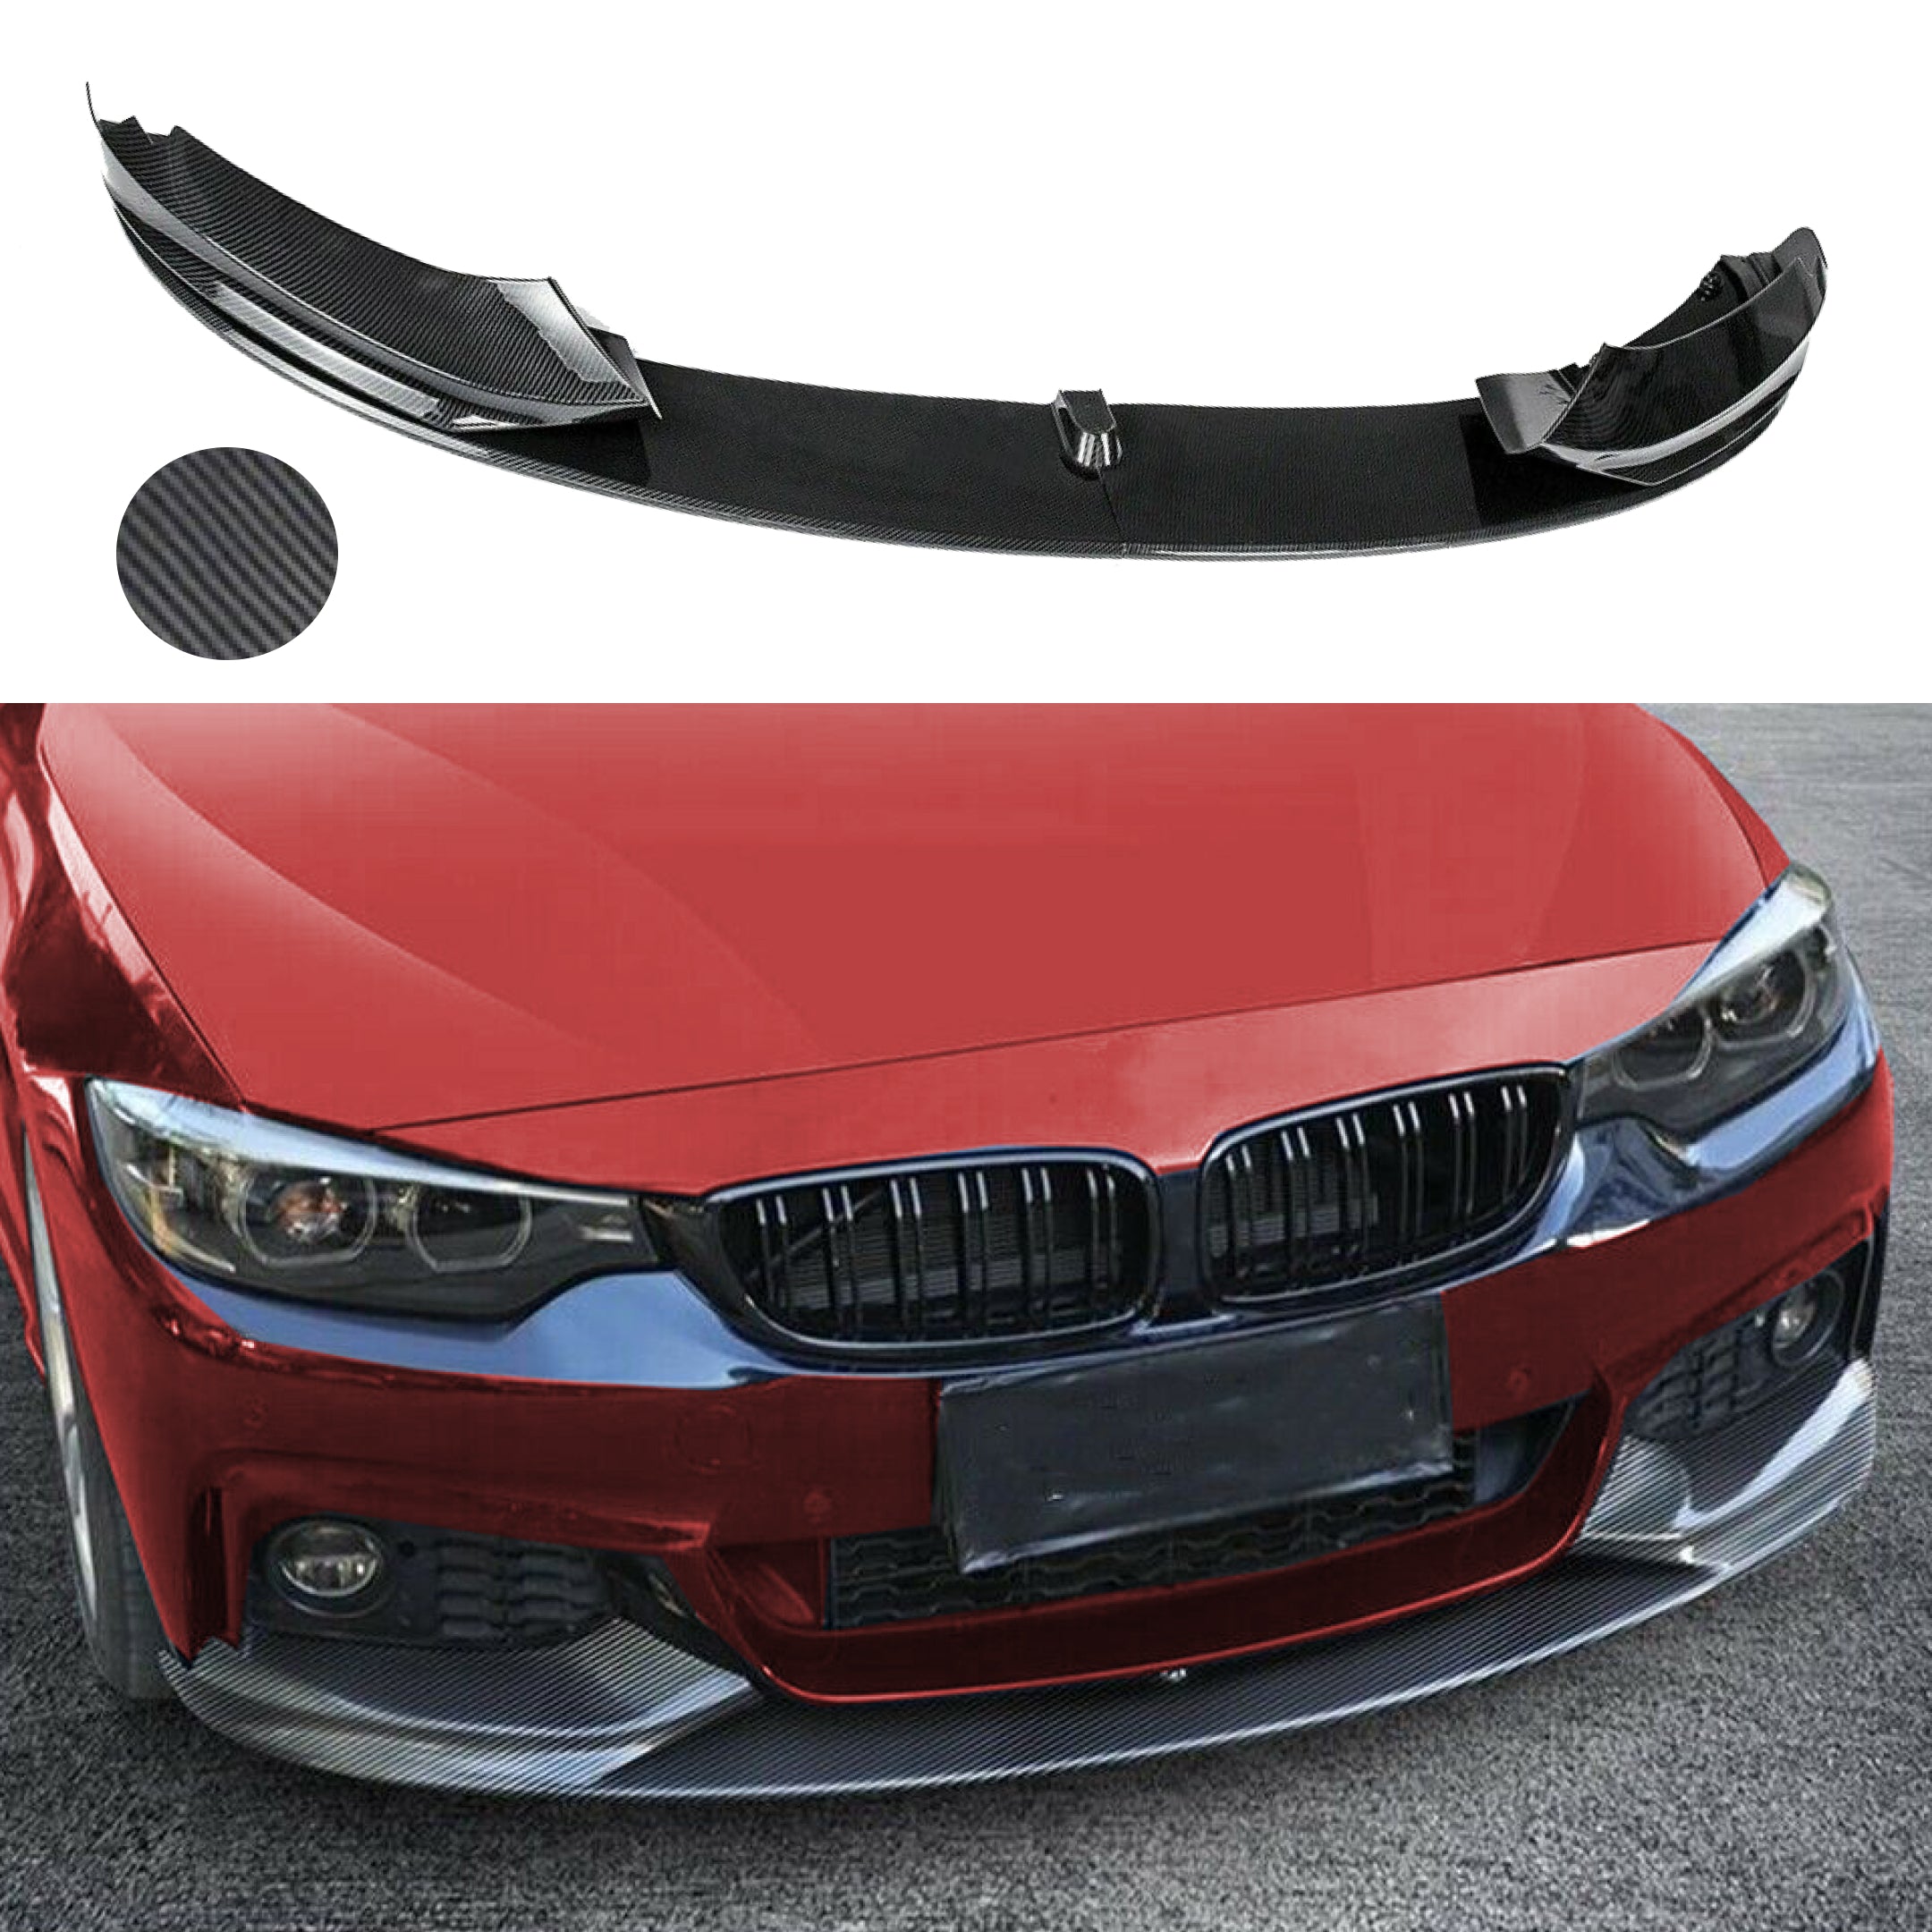 Fits 2014-2020 BMW F32 F33 F36 4 Series M Sport Front Lip Spoiler (Carbon Fiber Print)